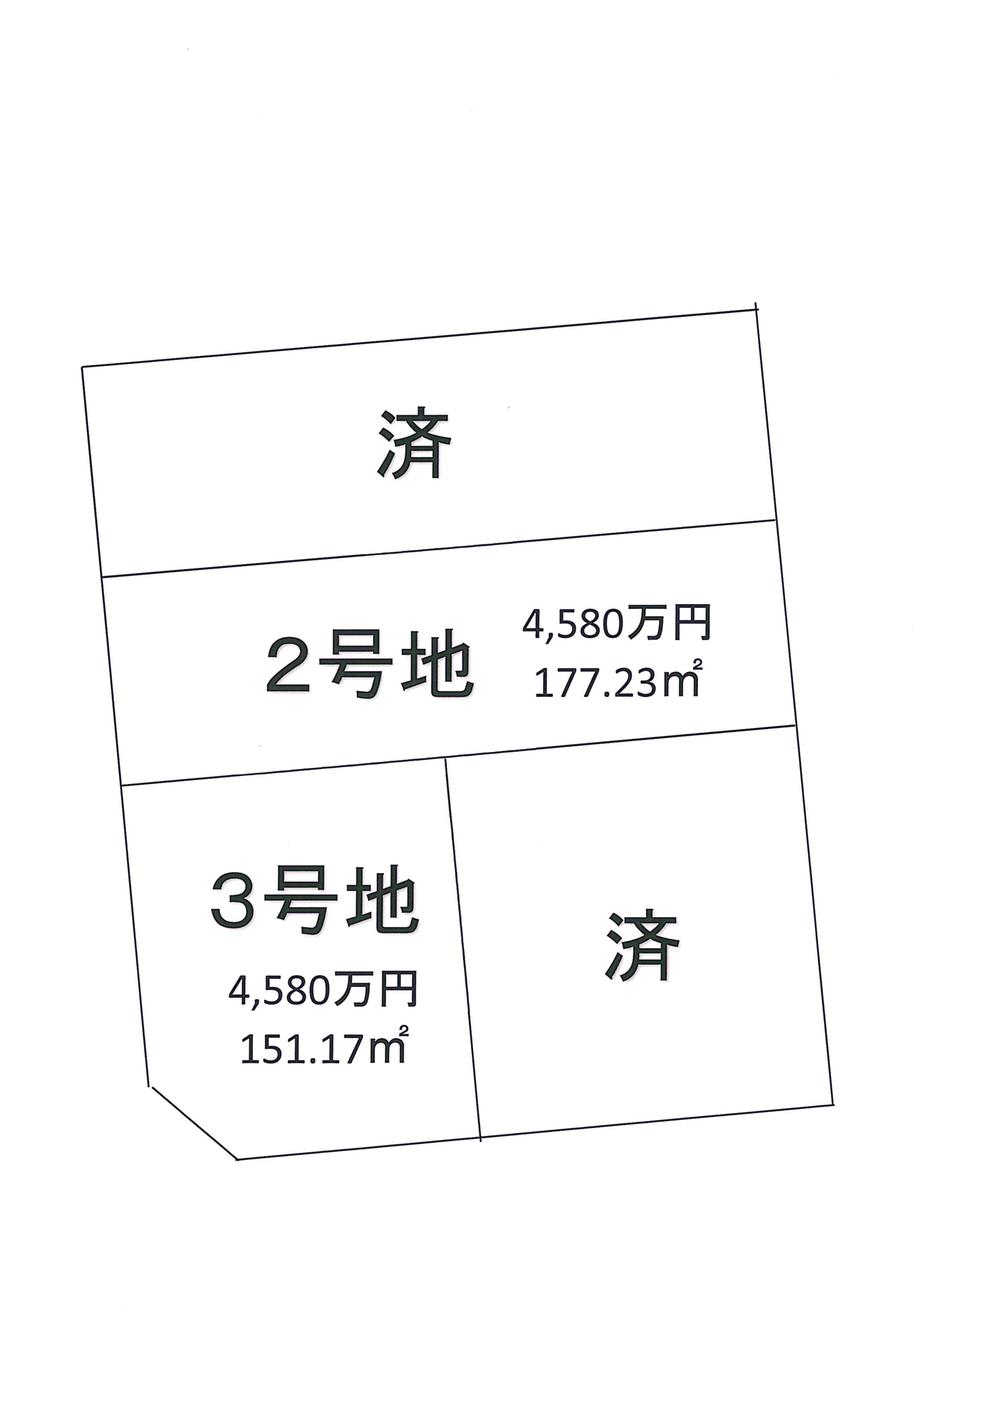 Compartment figure. Land price 45,800,000 yen, Land area 151.17 sq m